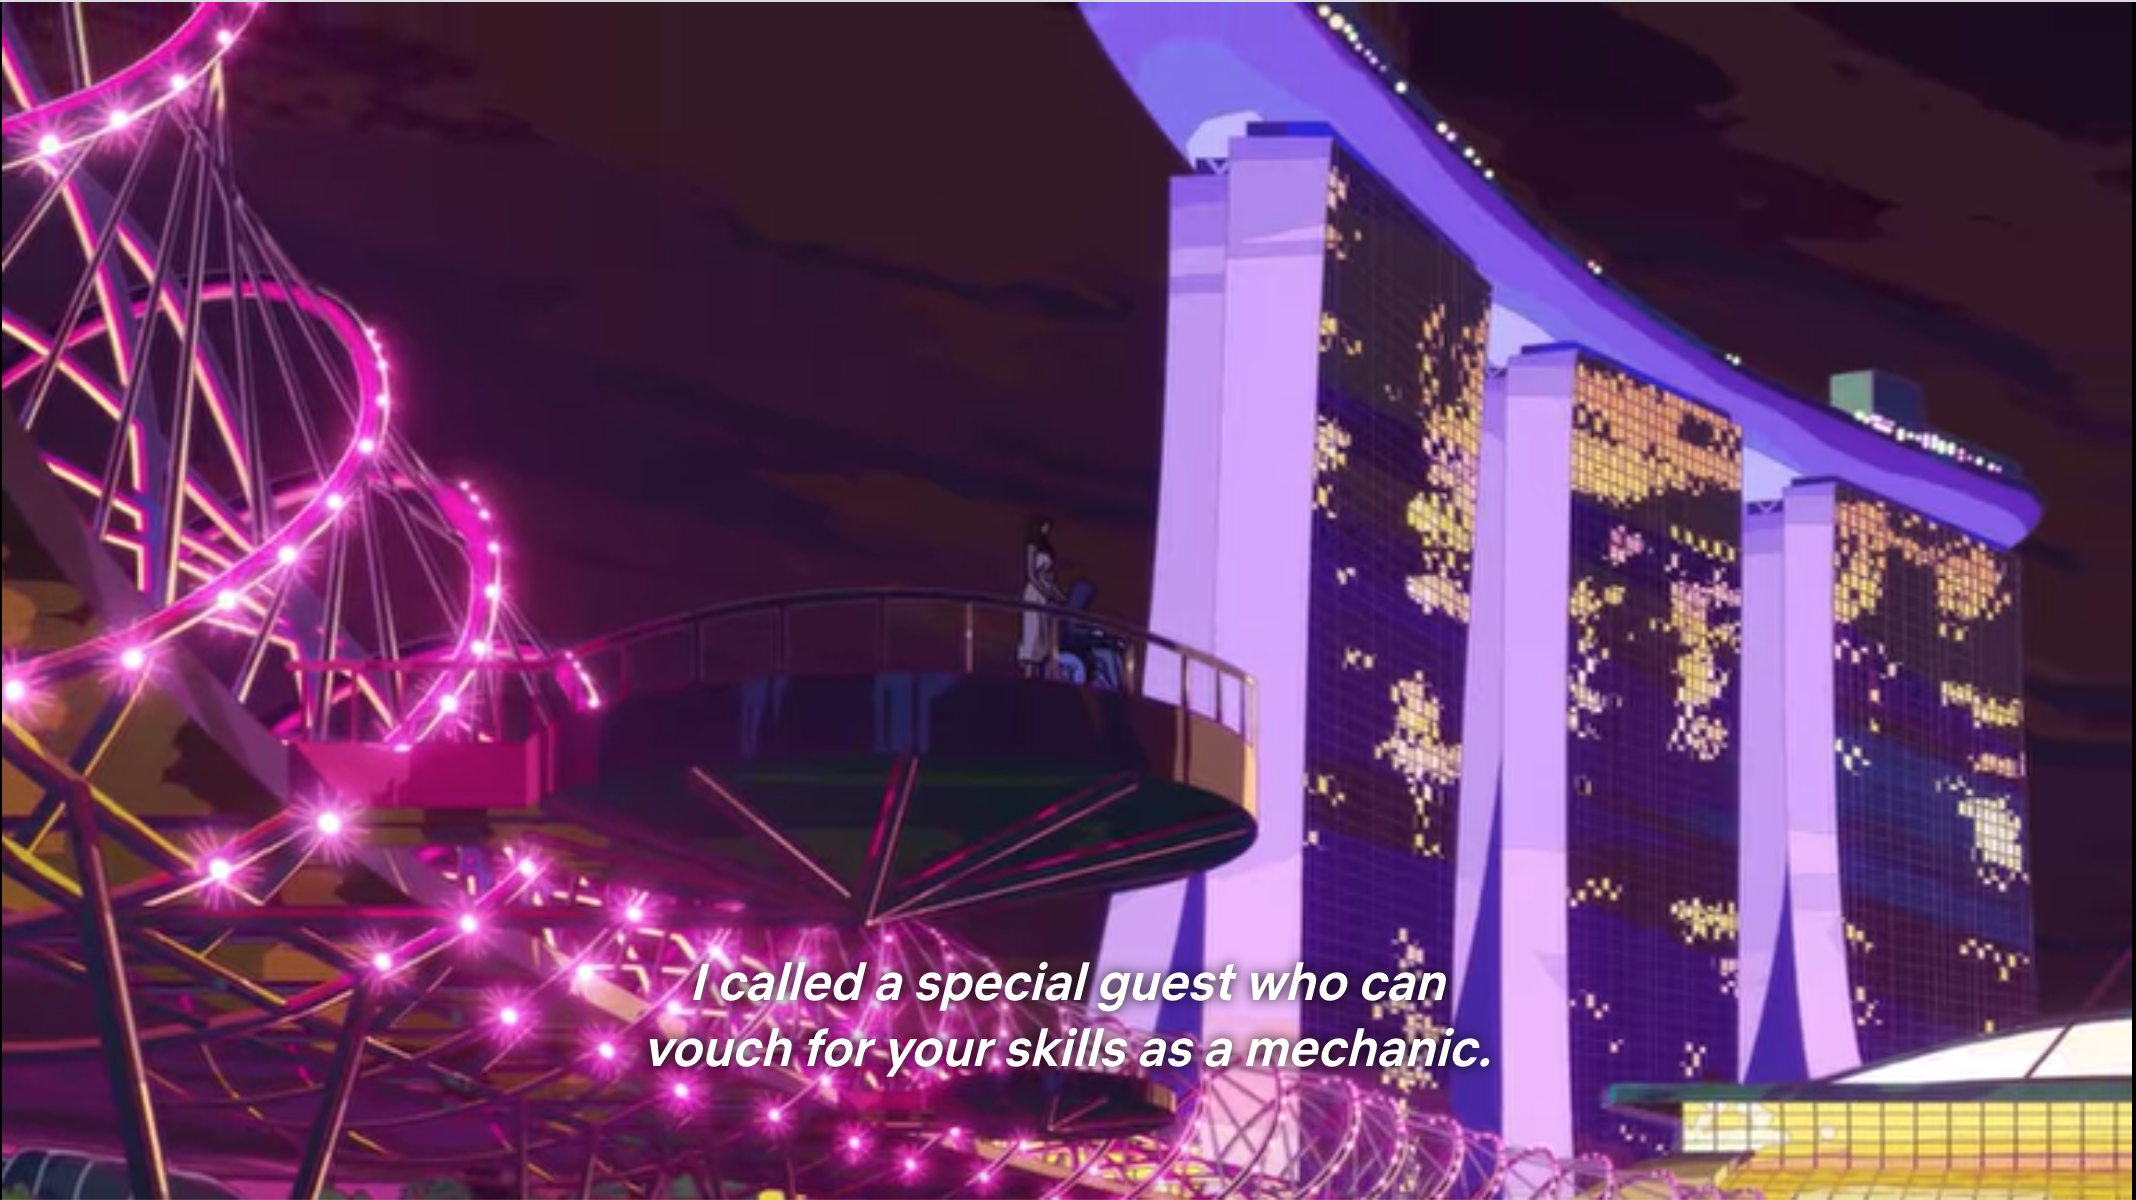 'Great Pretender' anime features S'pore landmarks & scenery ...